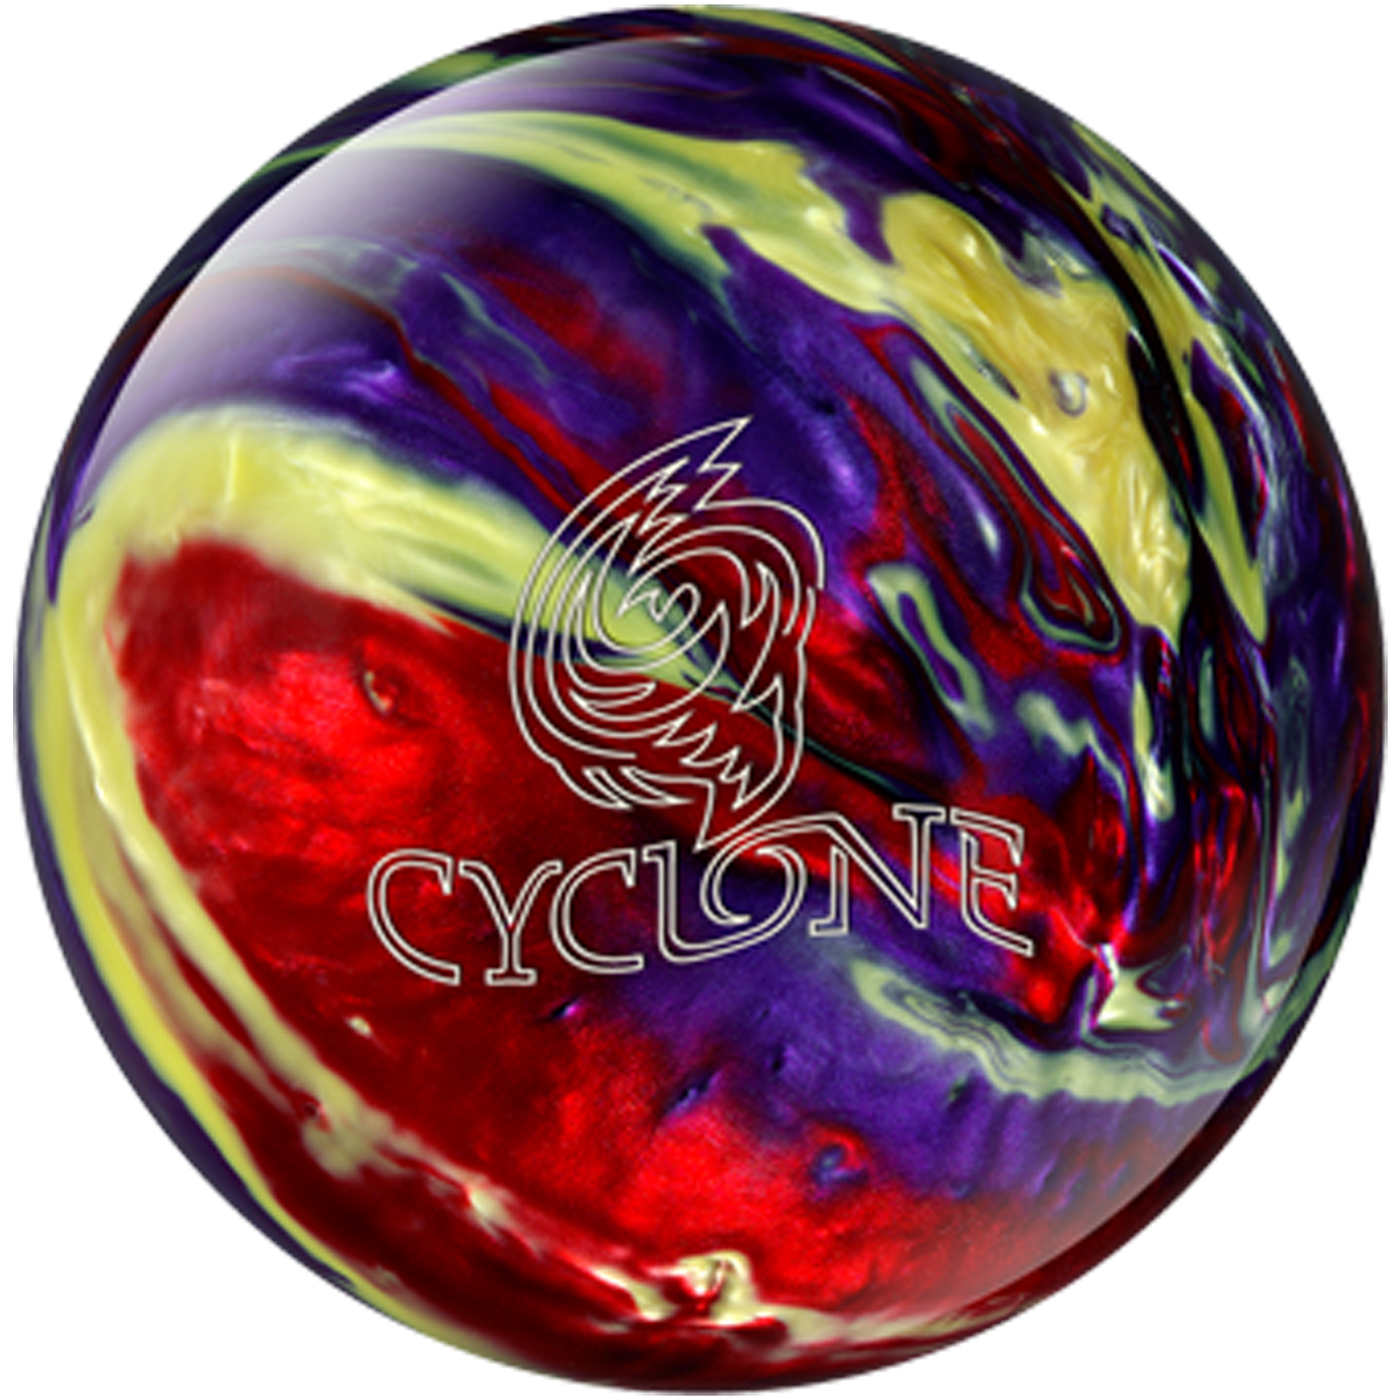 Cyclone Red/Purple/Yellow Bowling Ball